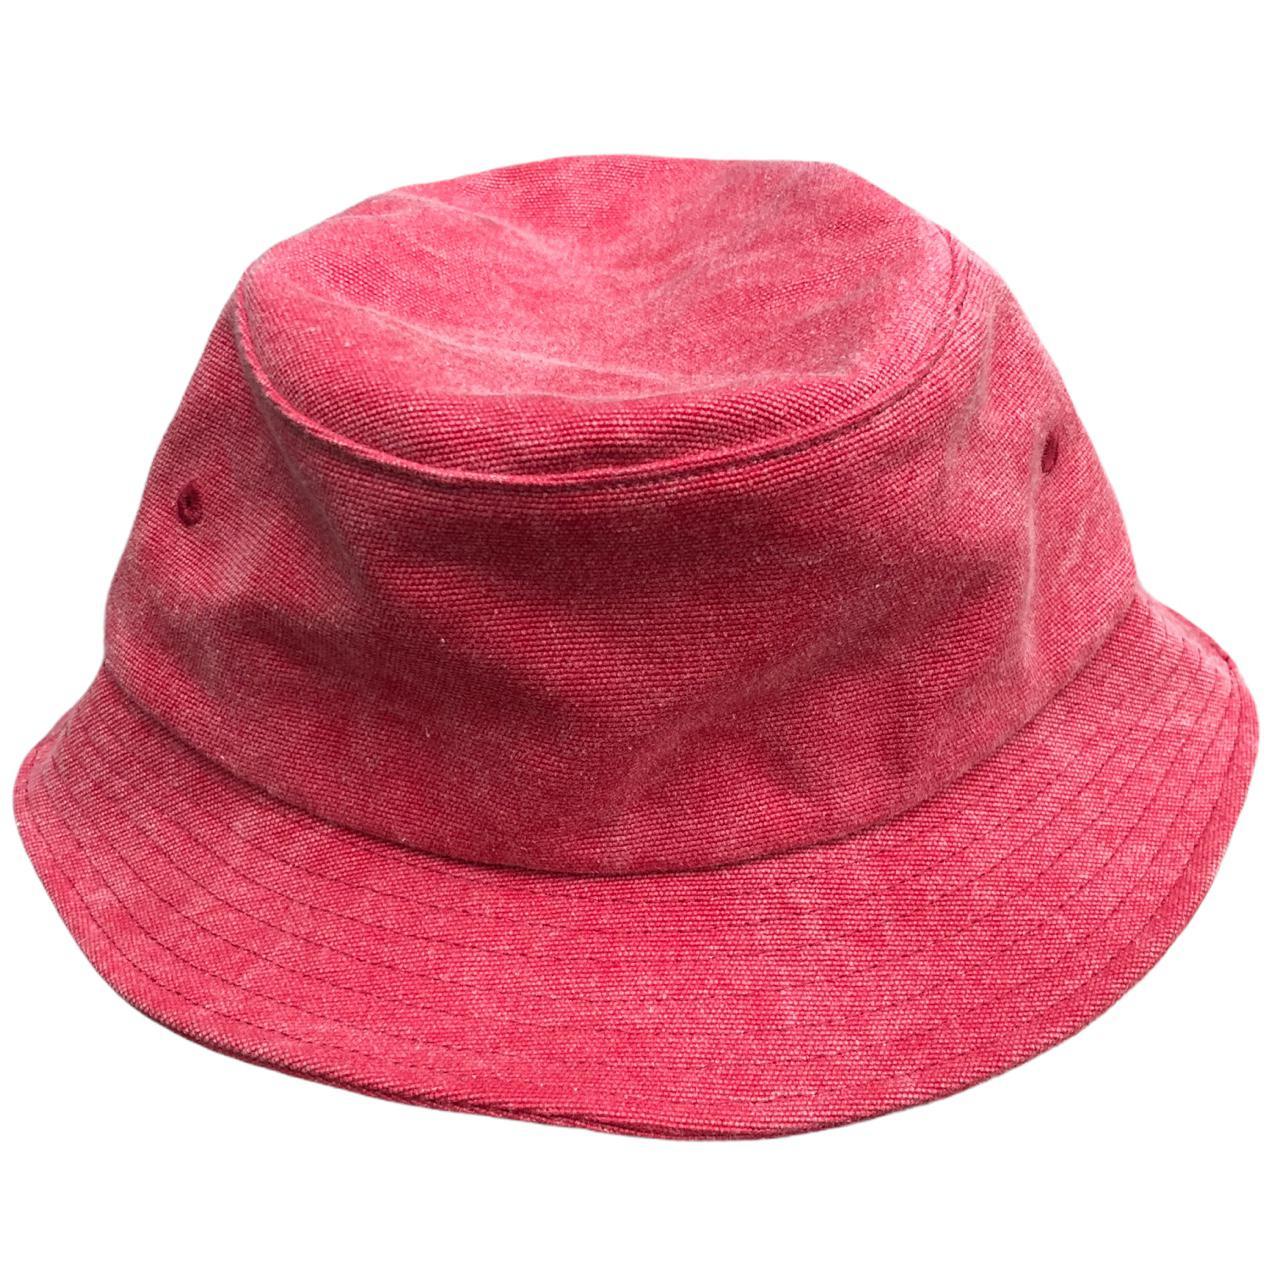 Product Image 2 - Noah Crusher Bucket Hat. Size